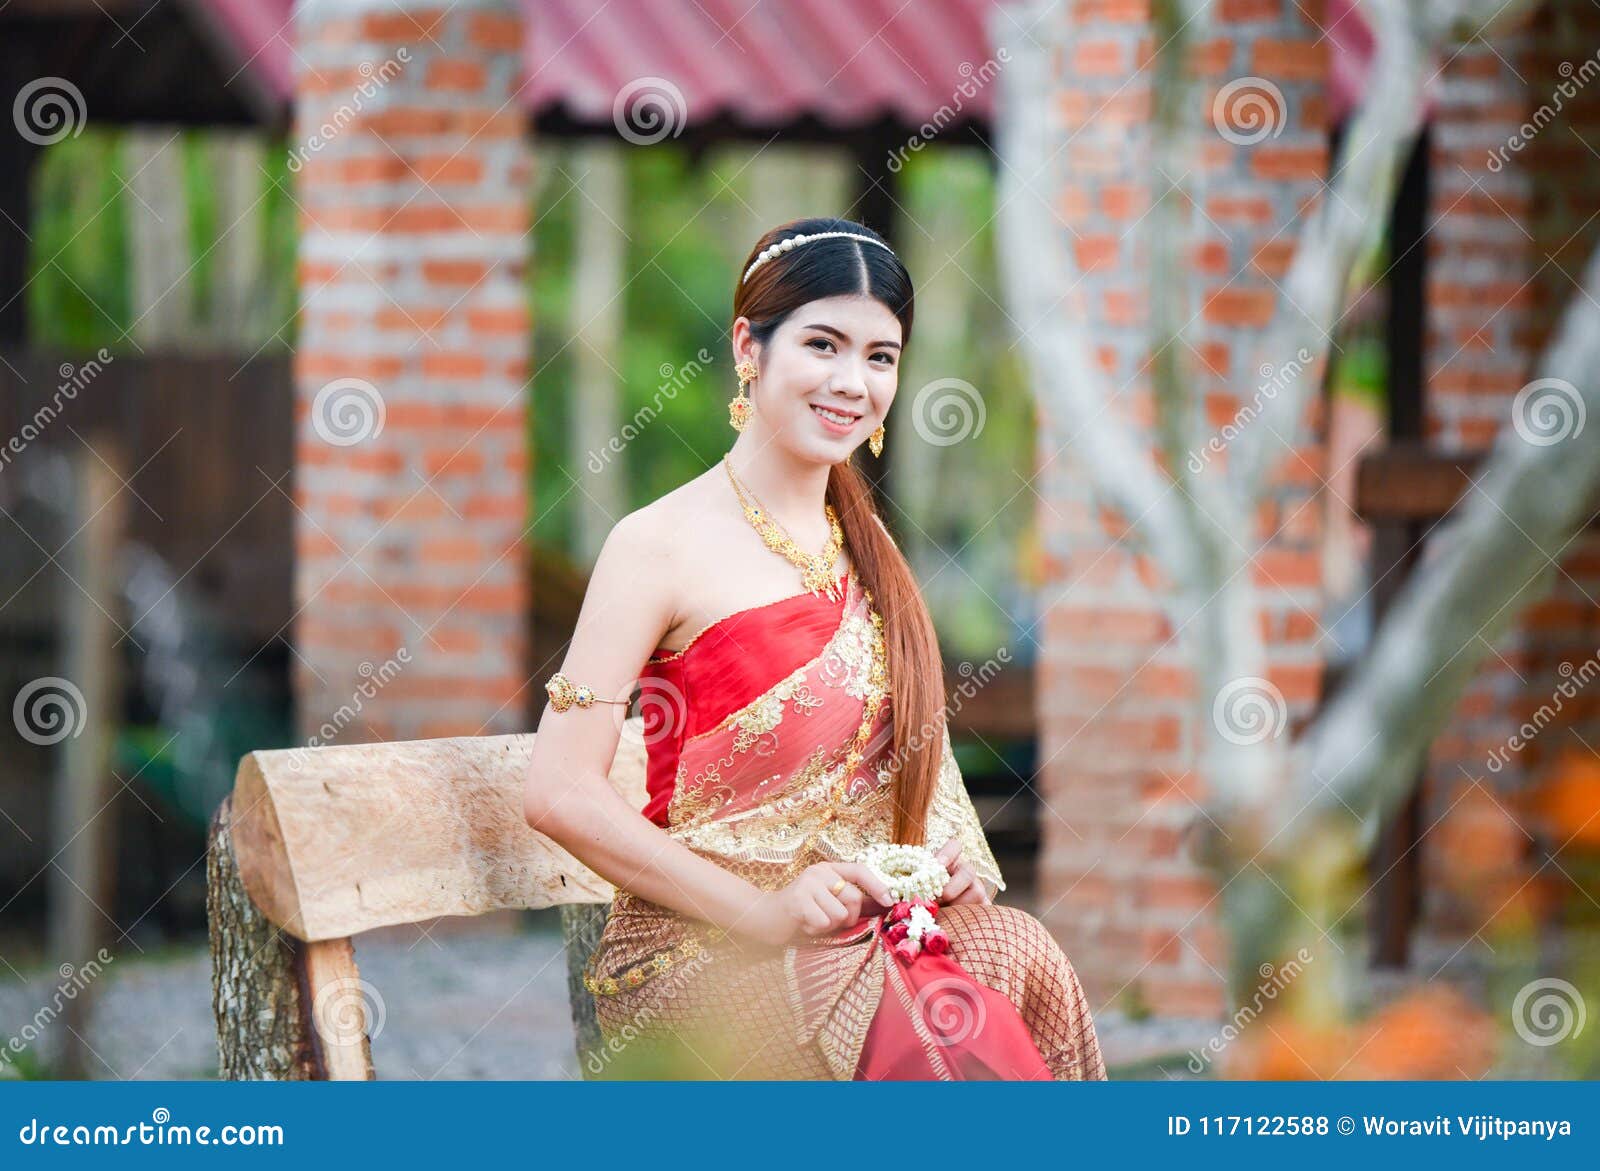 https://thumbs.dreamstime.com/z/beautiful-thai-girl-thai-costume-wearing-bride-dress-%C3%A0%C2%B8%C2%B0%C3%A0%C2%B9%E2%80%B0%C3%A0%C2%B8%C3%BF%C3%A0%C2%B8%C2%A3-beautiful-thai-girl-thai-costume-asian-woman-wearing-117122588.jpg